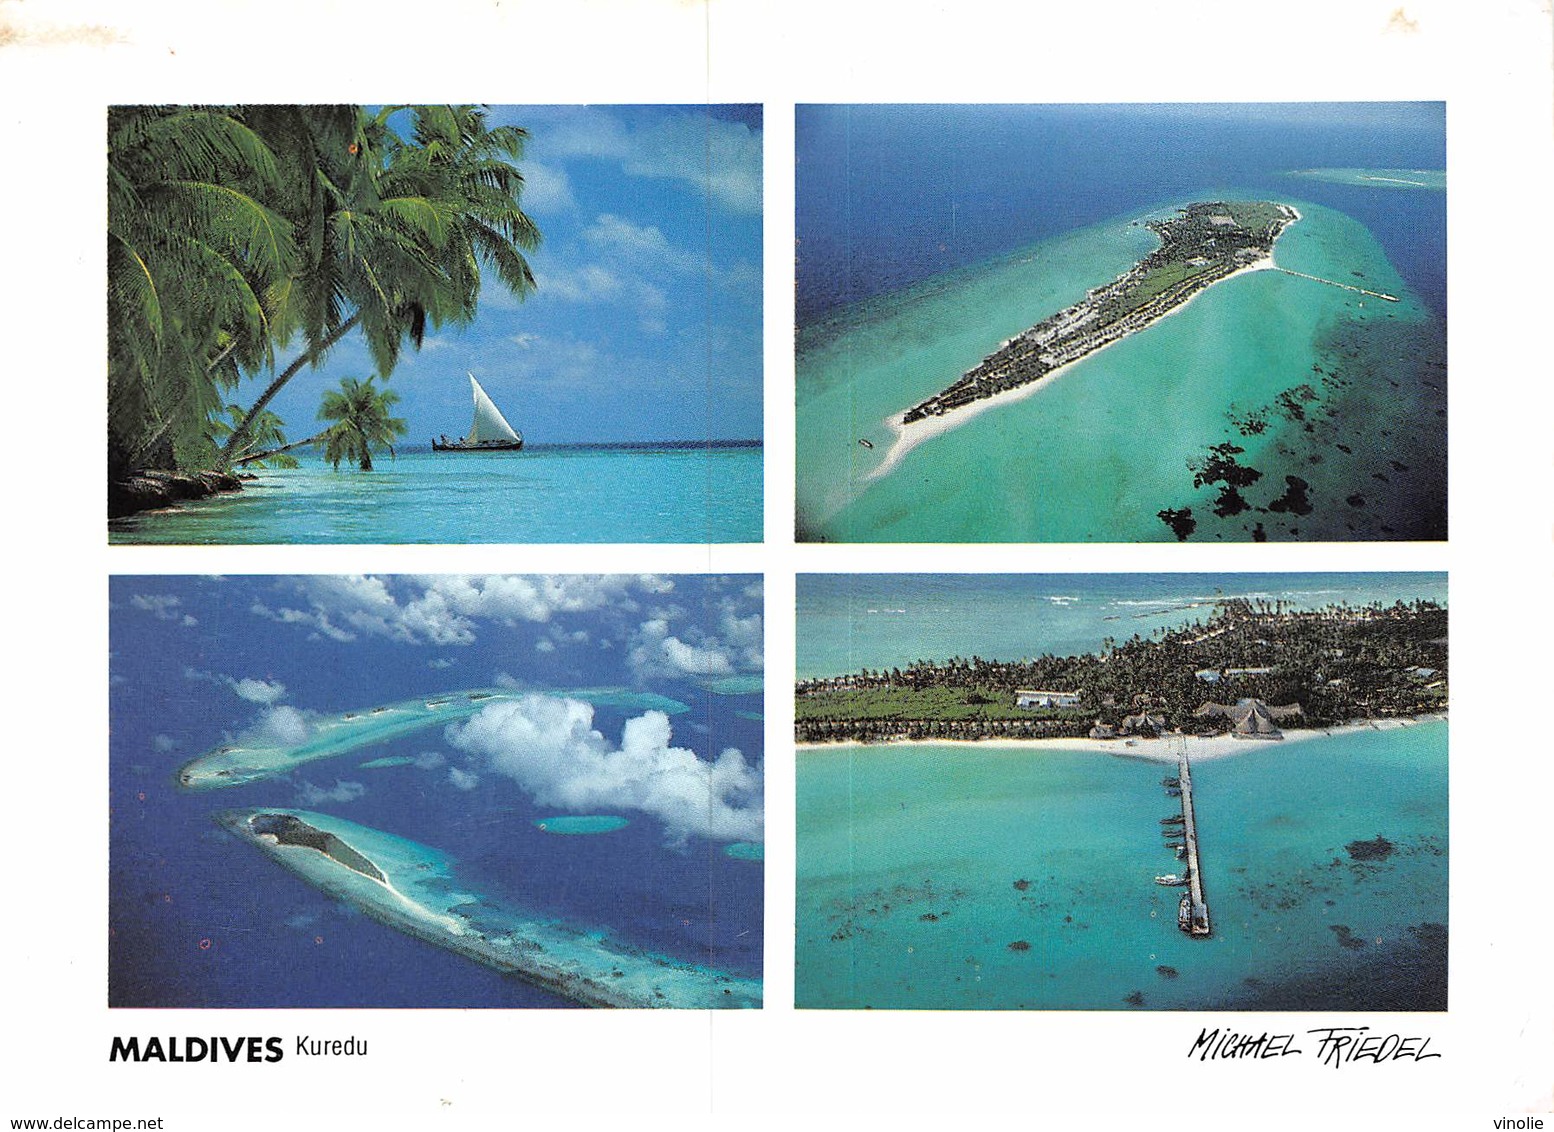 PIE-JmT-19-1605: MALDIVES. - Maldives